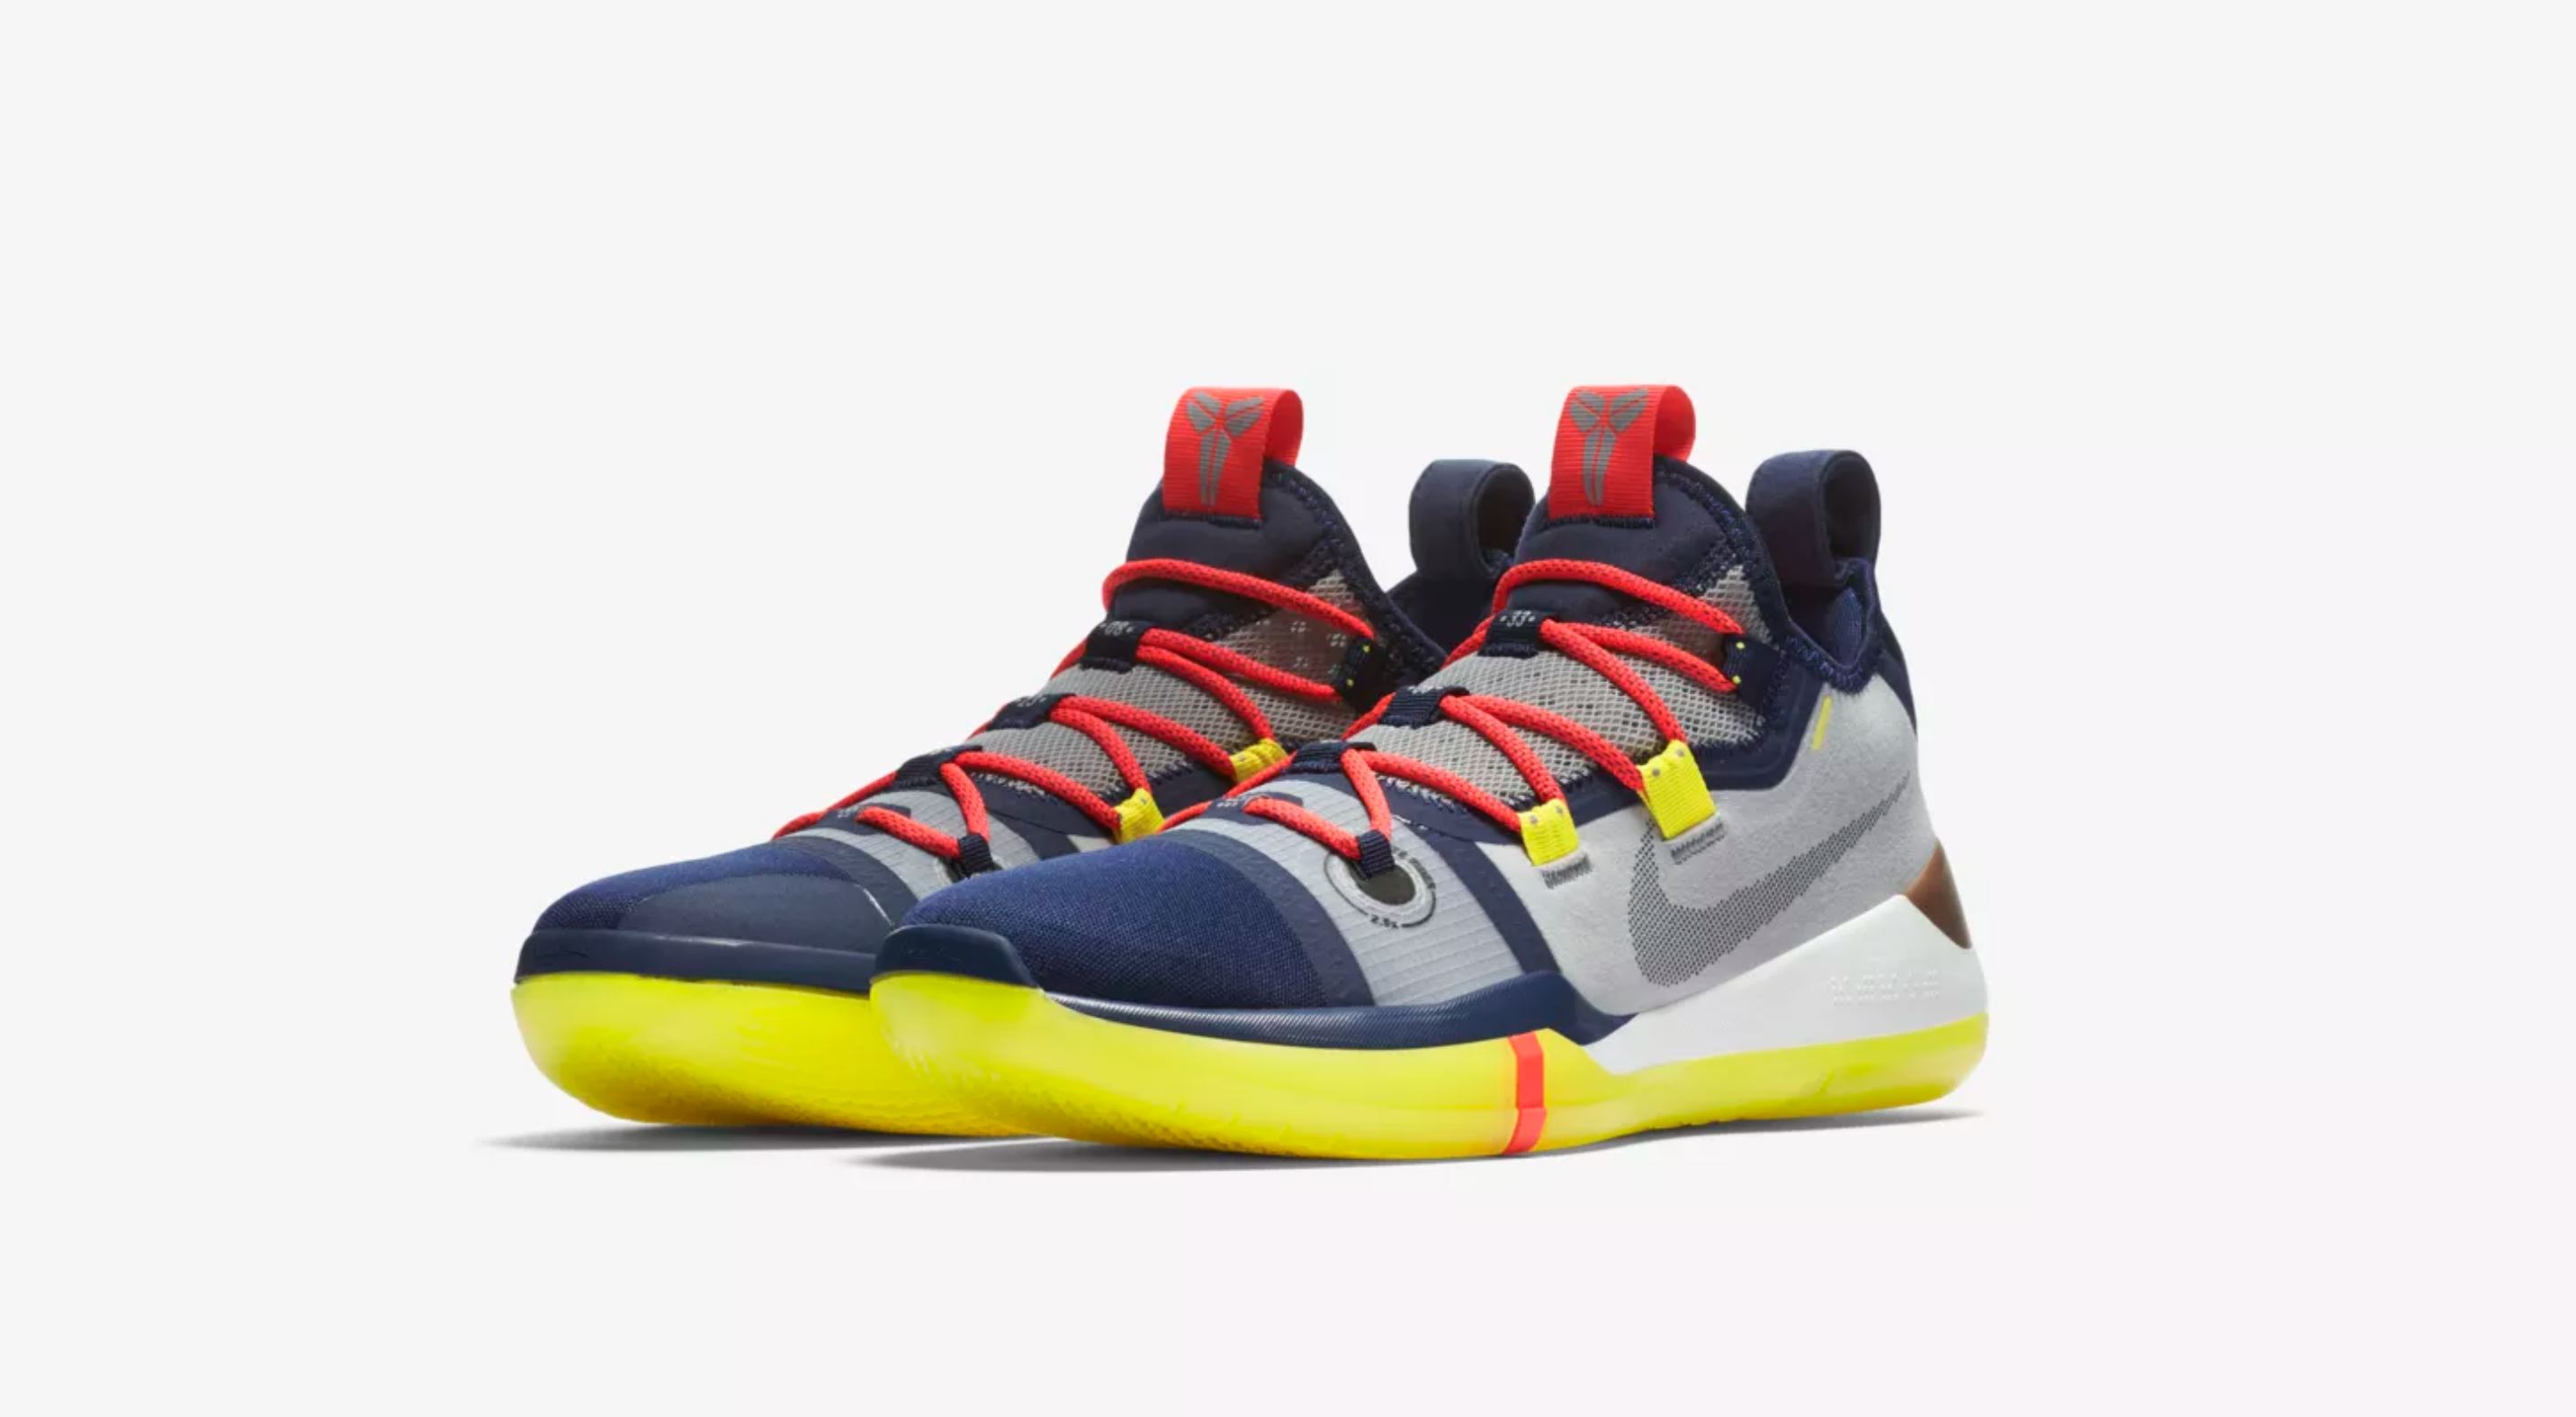 Kobe Bryant's Latest Nike Kobe AD Gets Confirmed Tech Specs - WearTesters